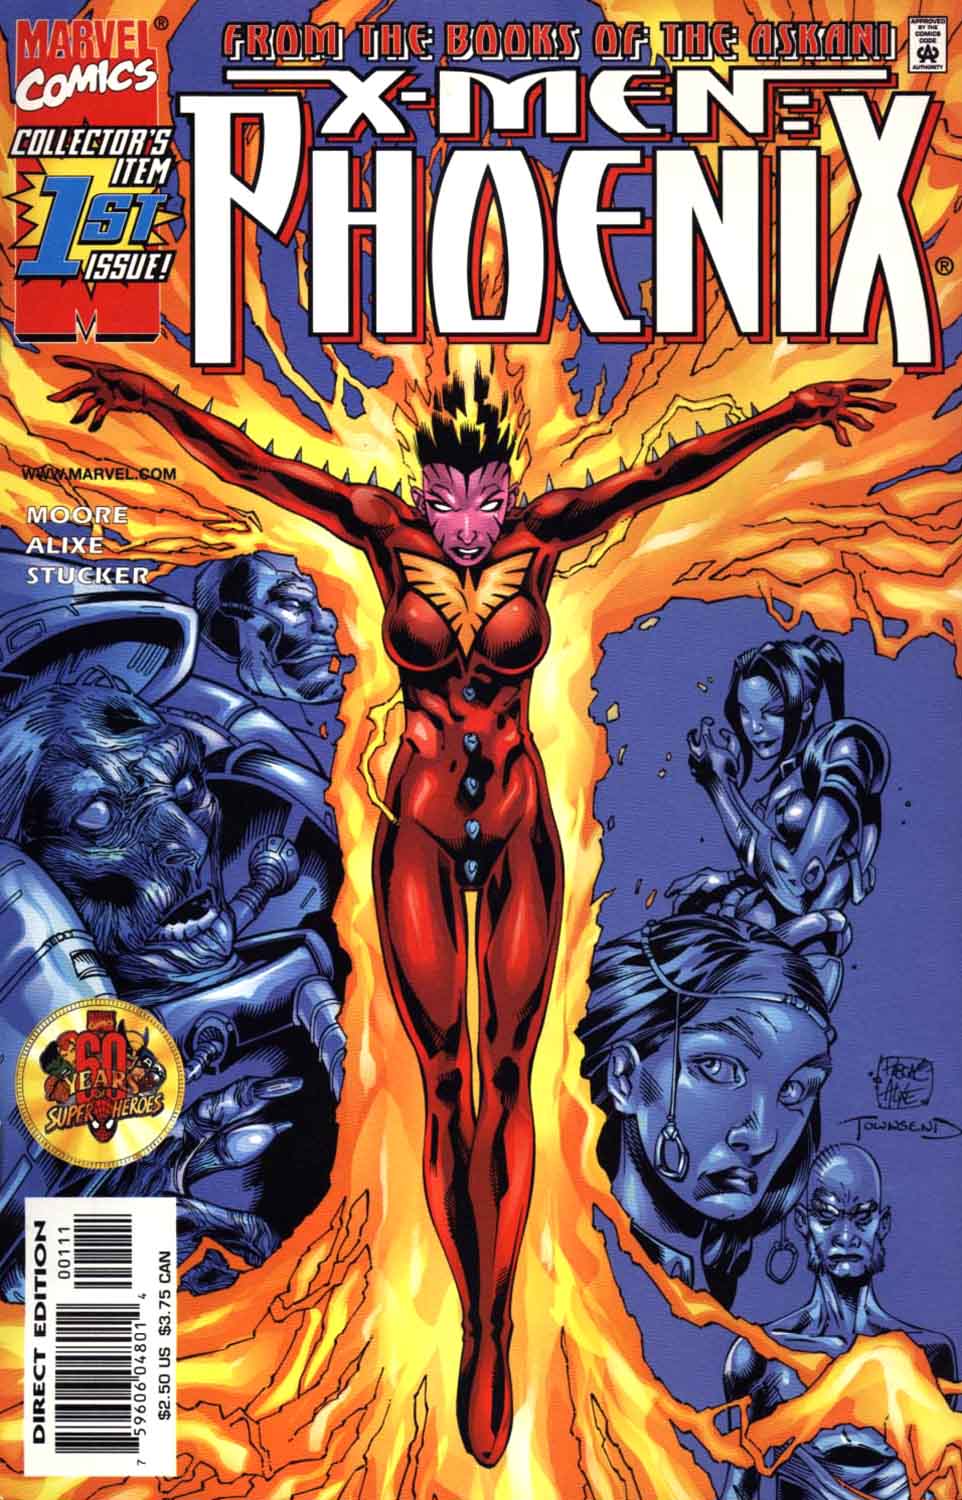 Read online X-Men: Phoenix comic -  Issue #1 - 1